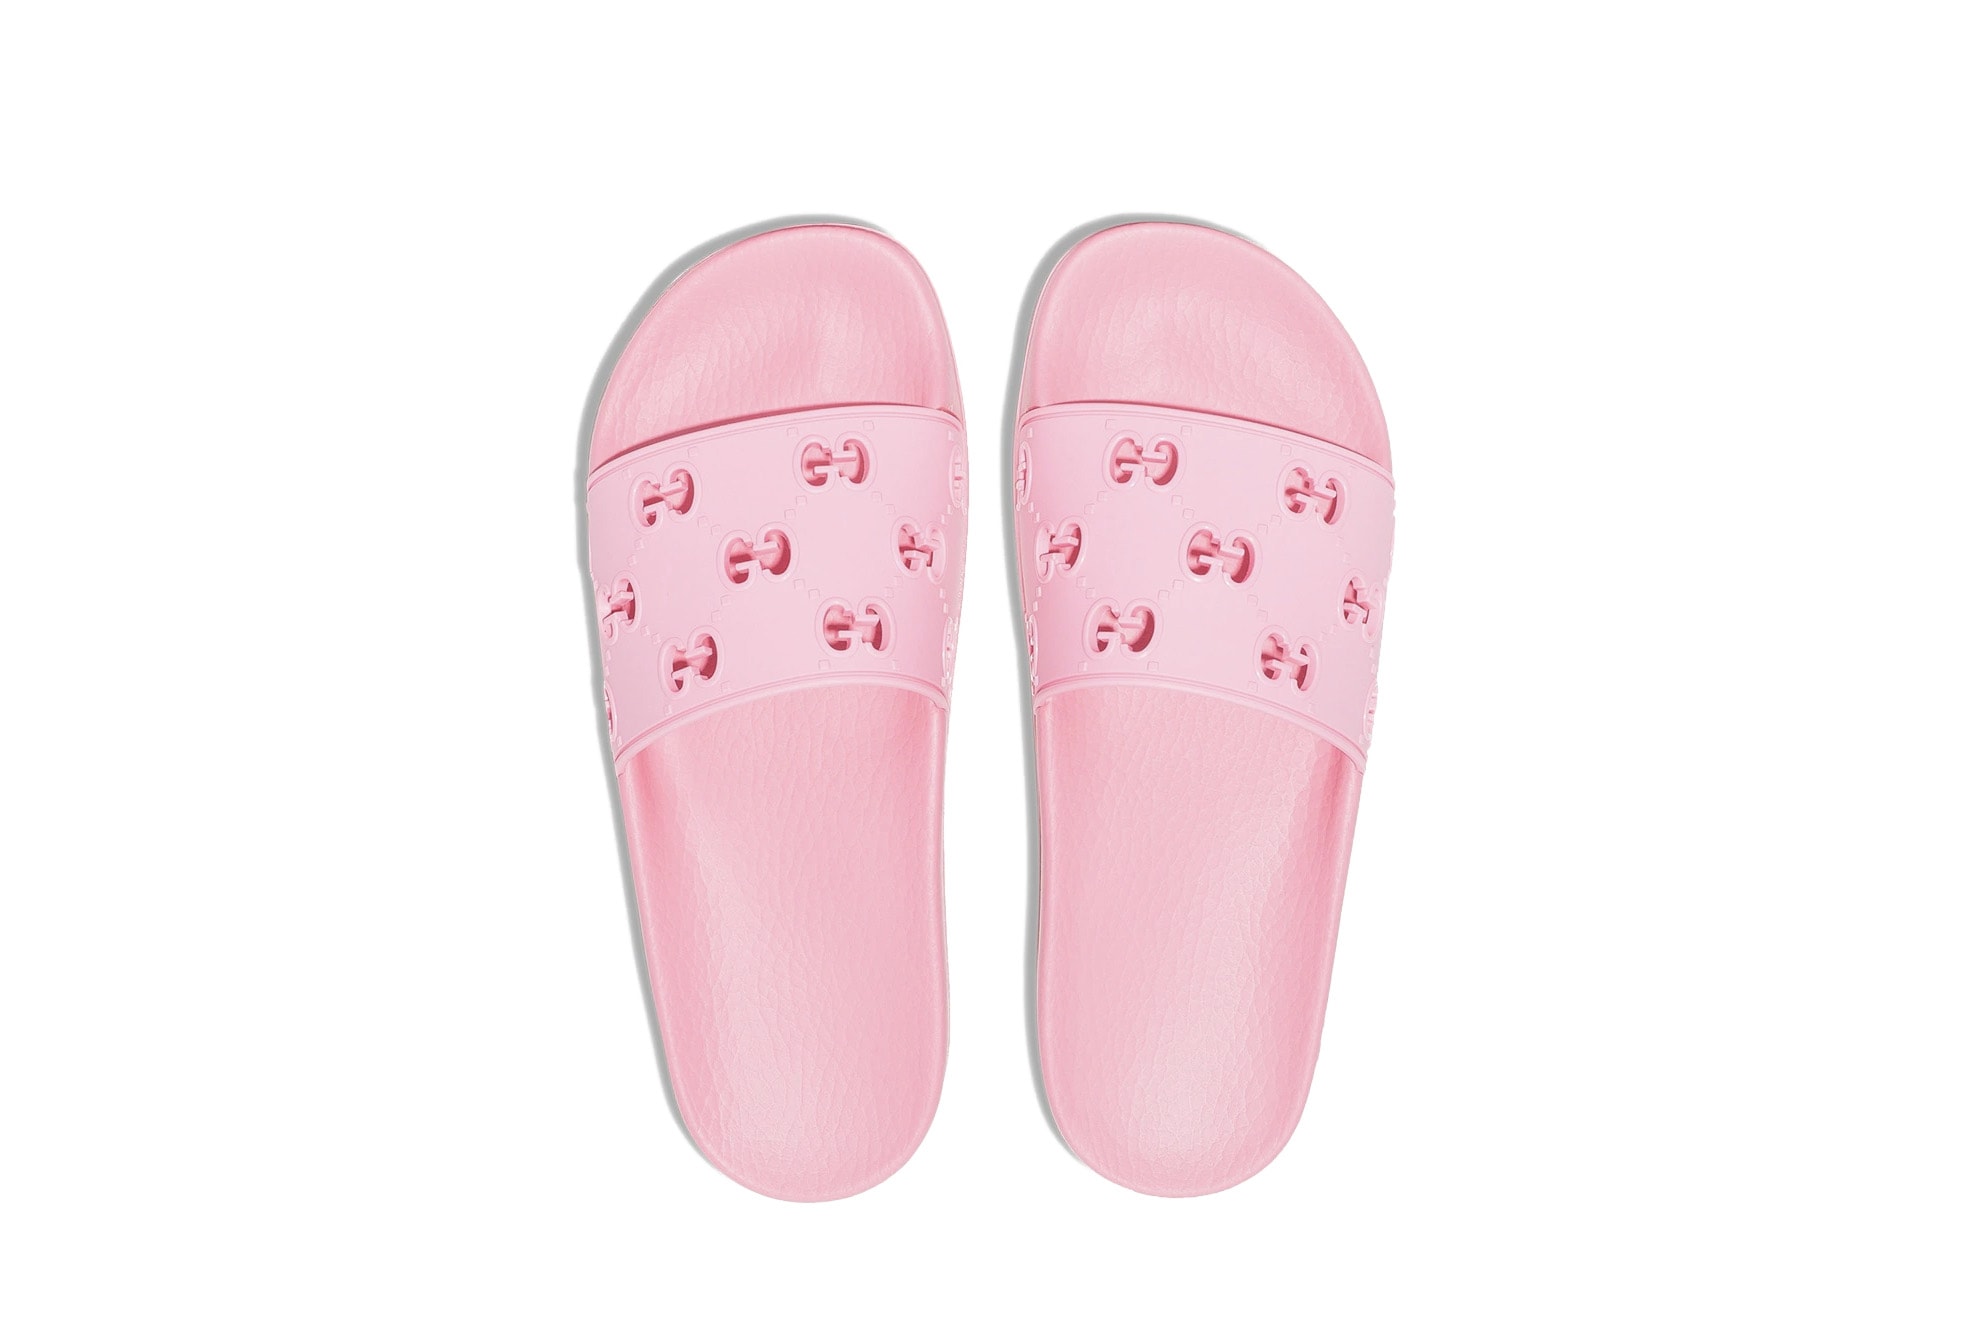 Gucci Logo Monogram Pink Pool Slides Summer Shoe Luxury Accessory Pastel Tone Fashion 